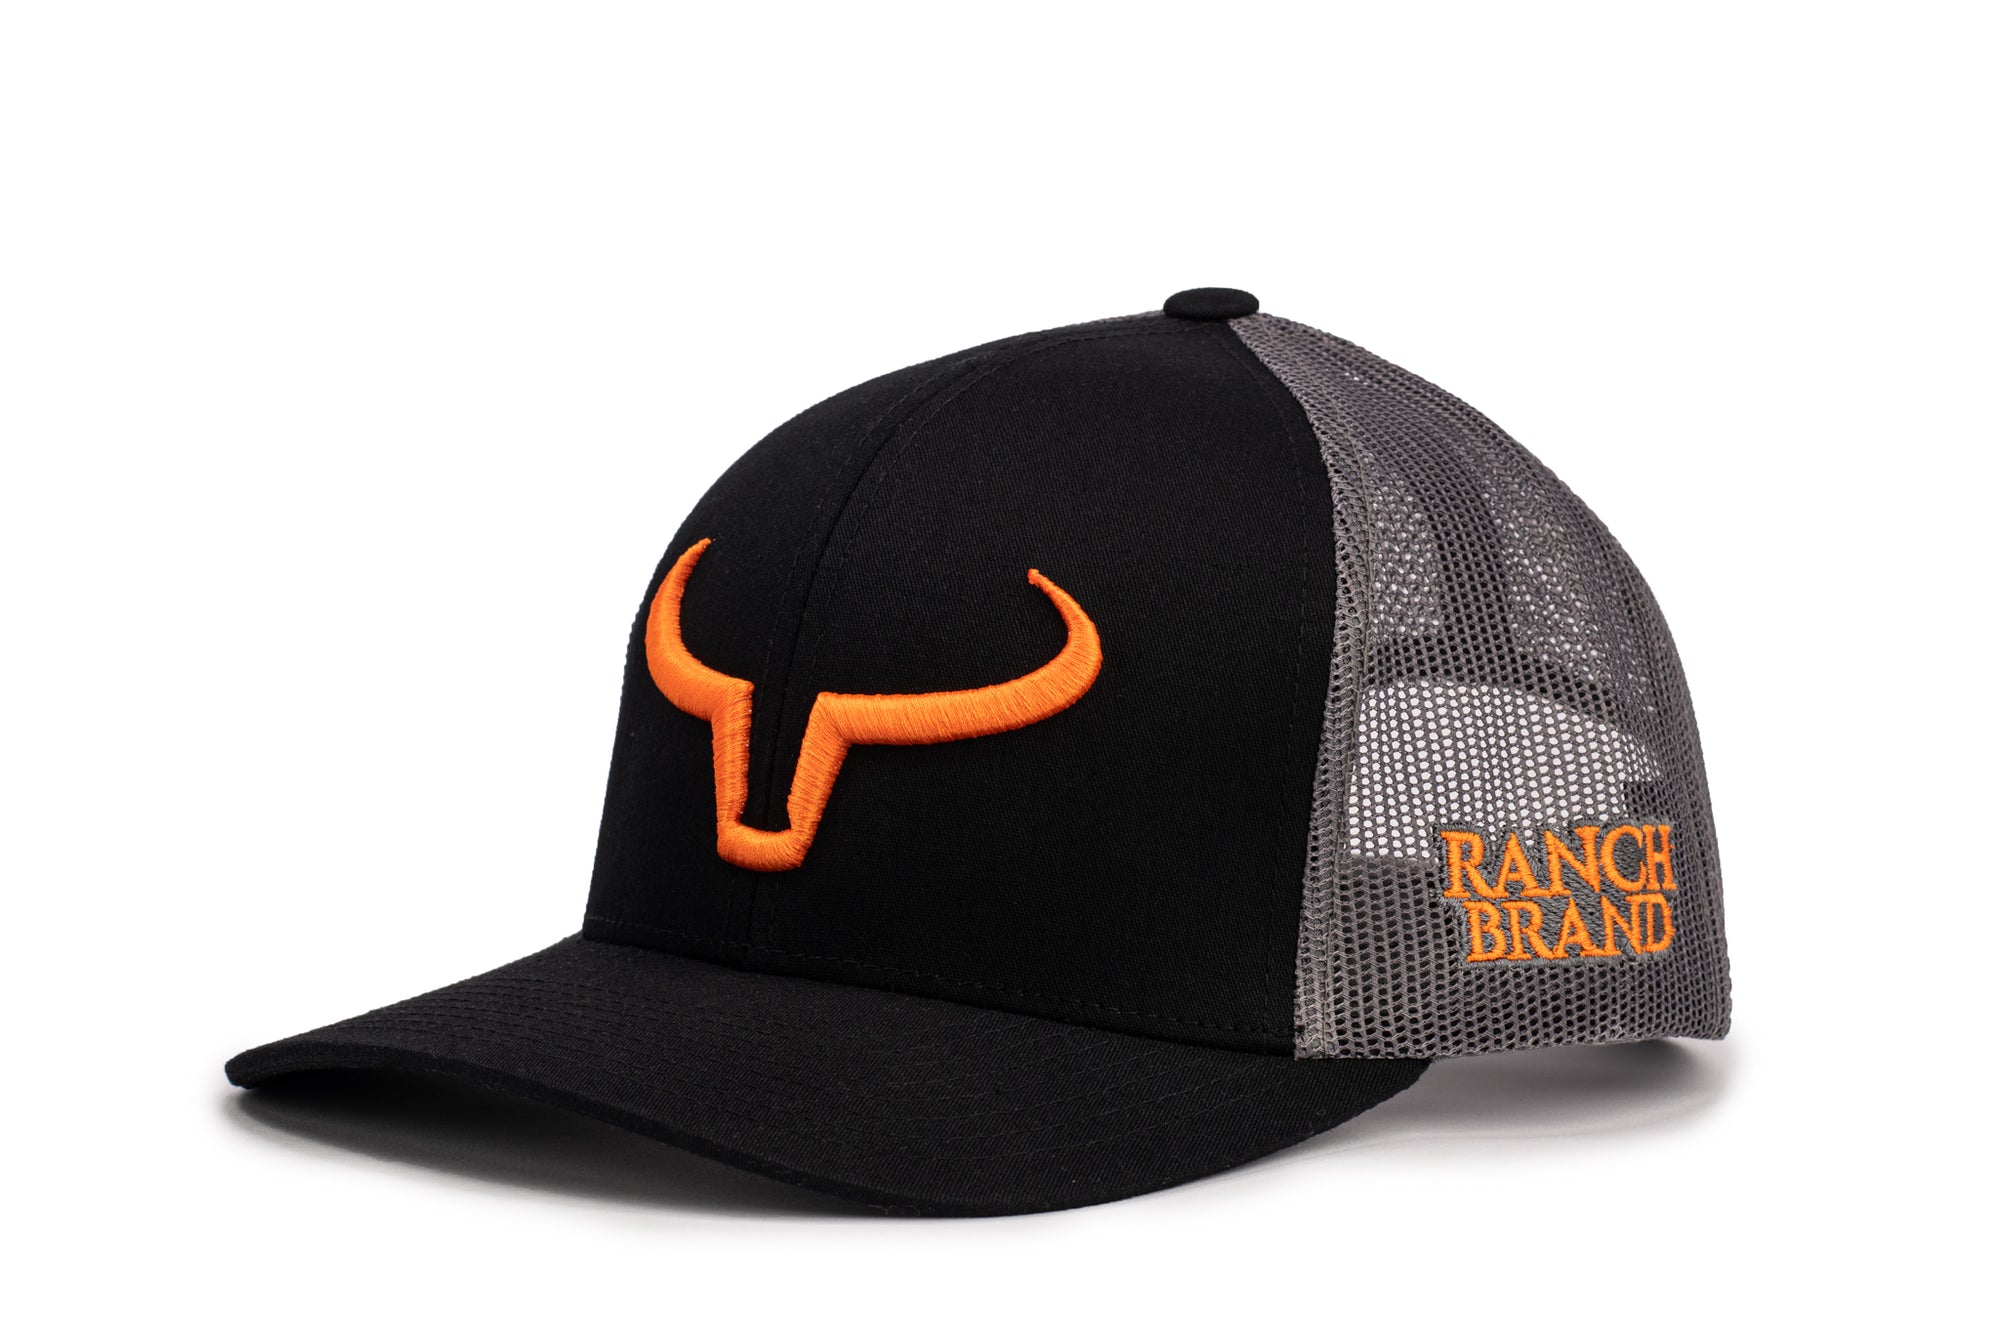 Rancher Enfant | Noir & Mesh Graphite | Logo Orange